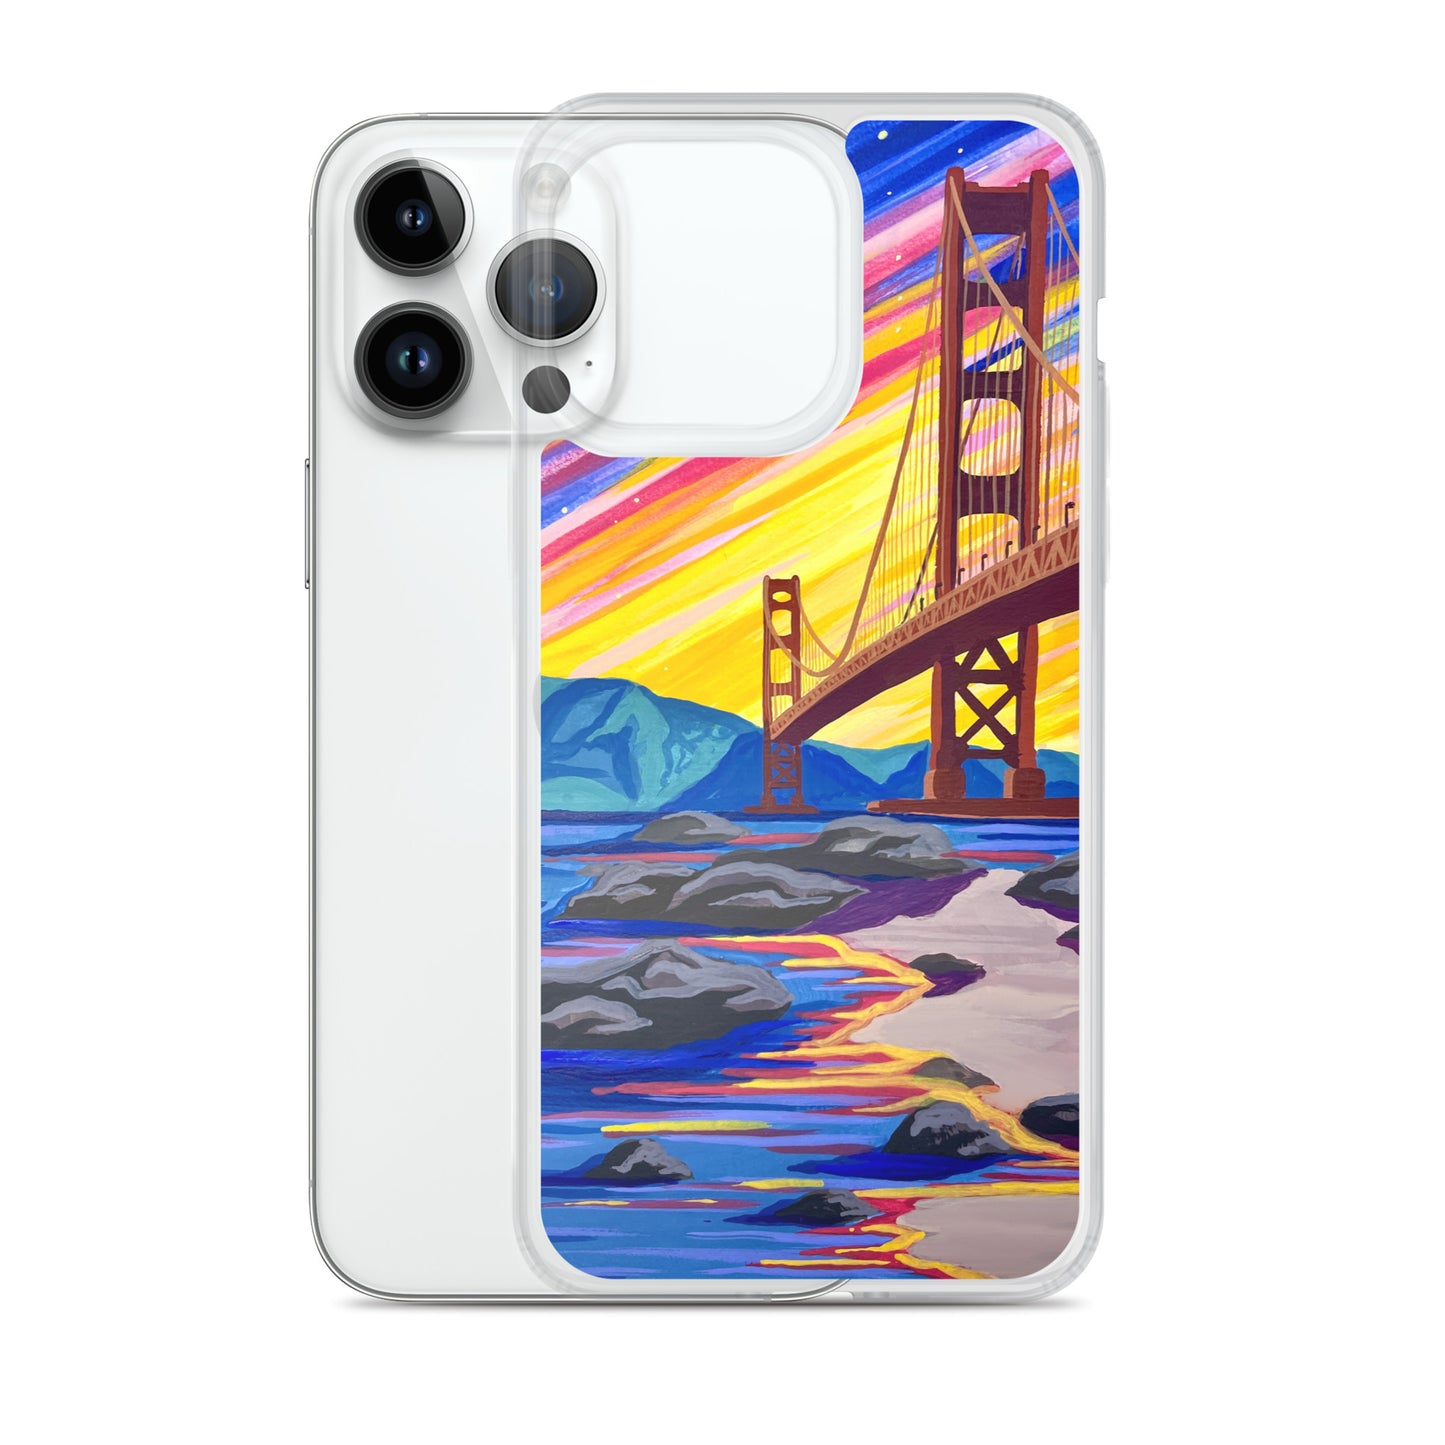 San Francisco iPhone Case